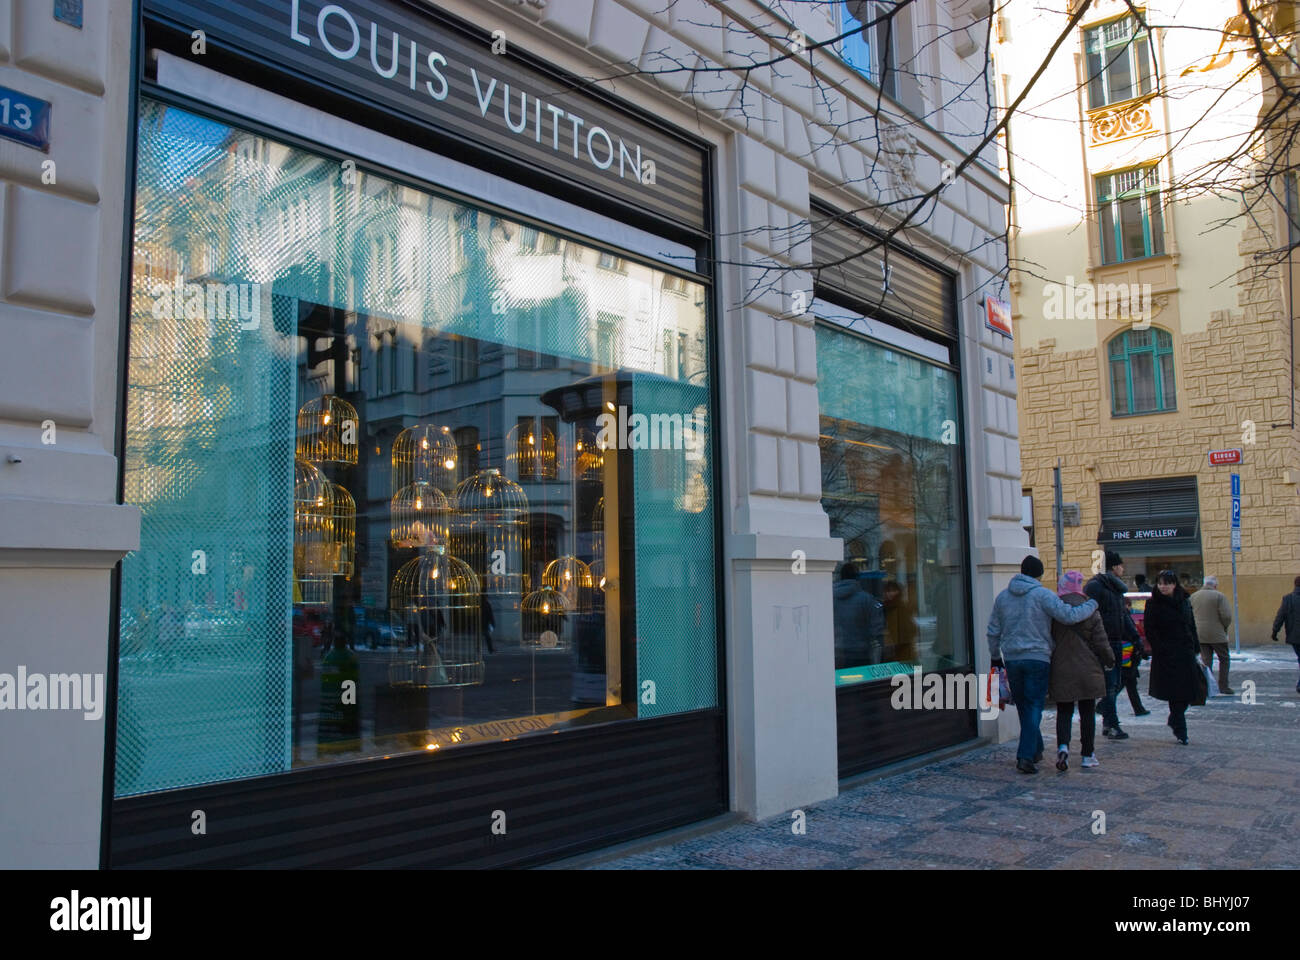 Louis Vuitton shop Parizska street Josefov central Prague Czech Republic  Europe Stock Photo - Alamy